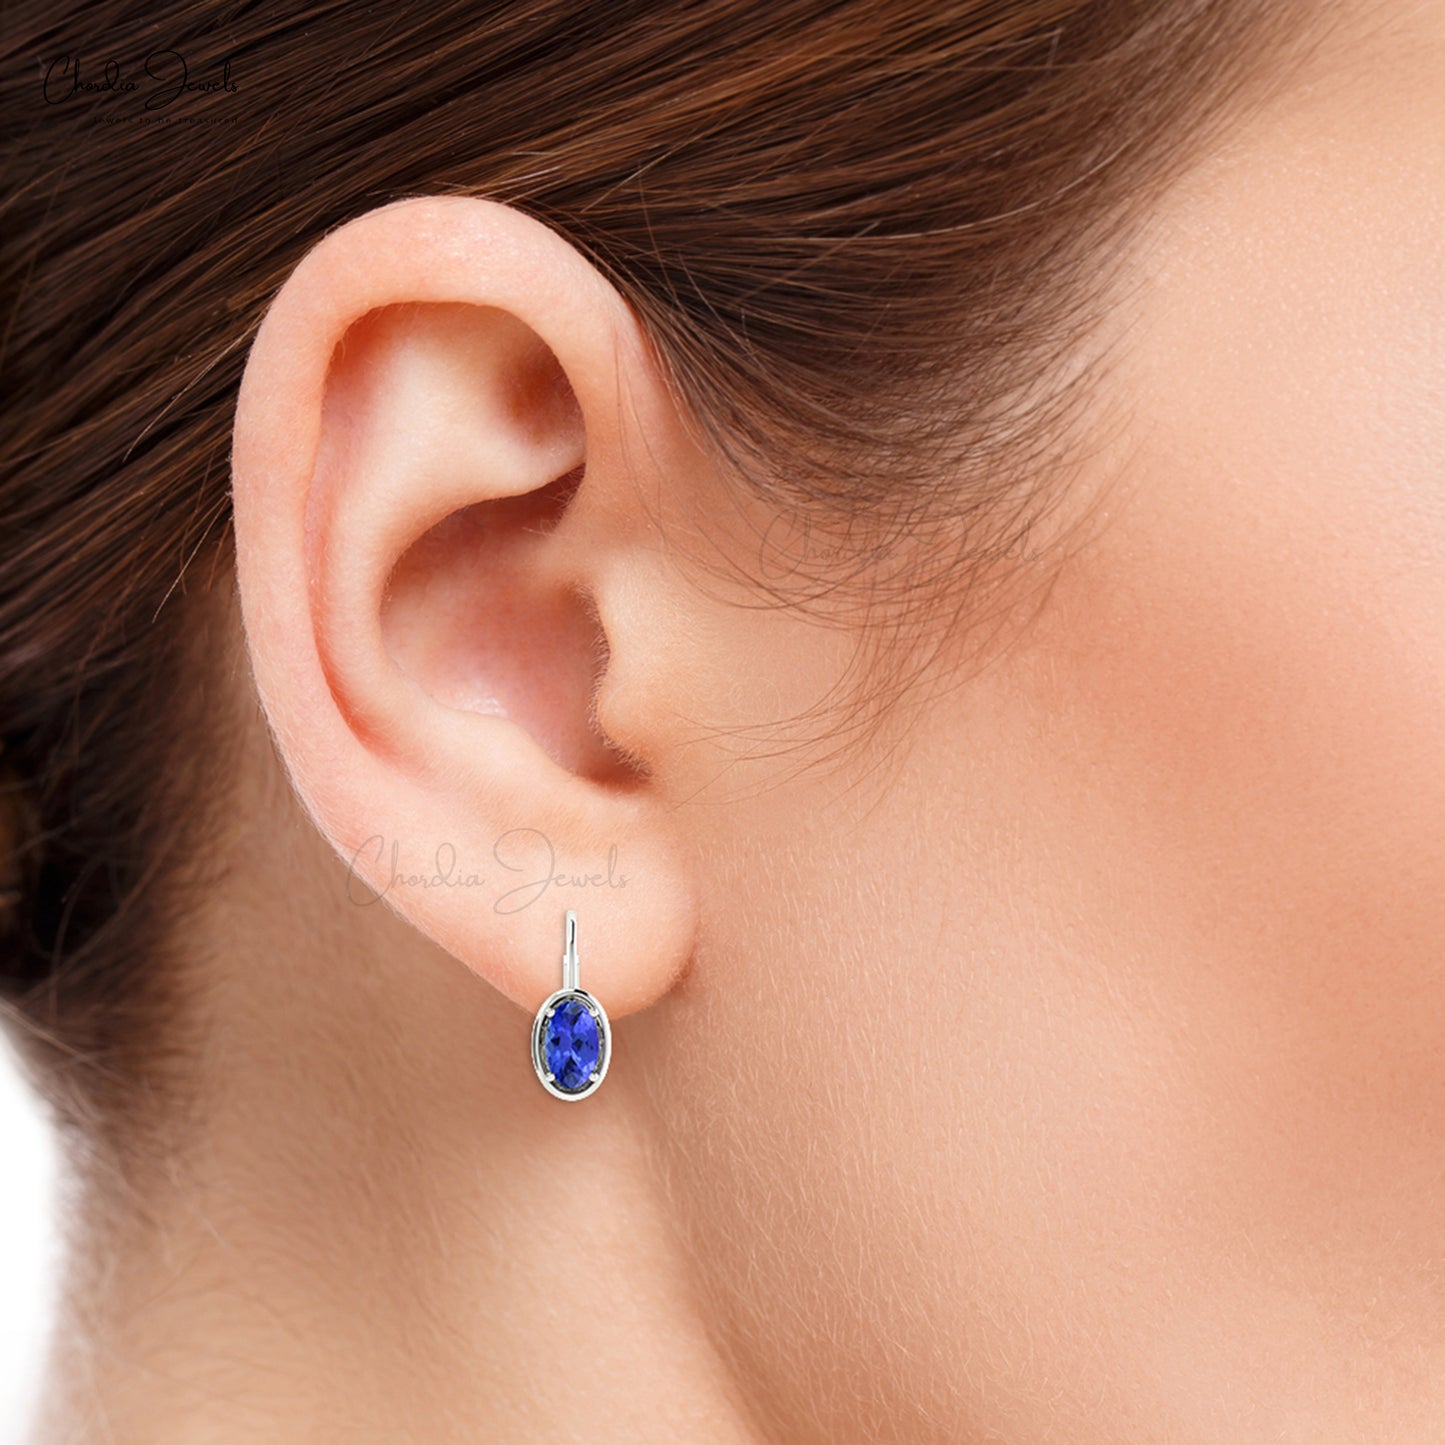 Oval Tanzanite Leverback Earrings in 14k White Gold December Birthstone Earring For Women